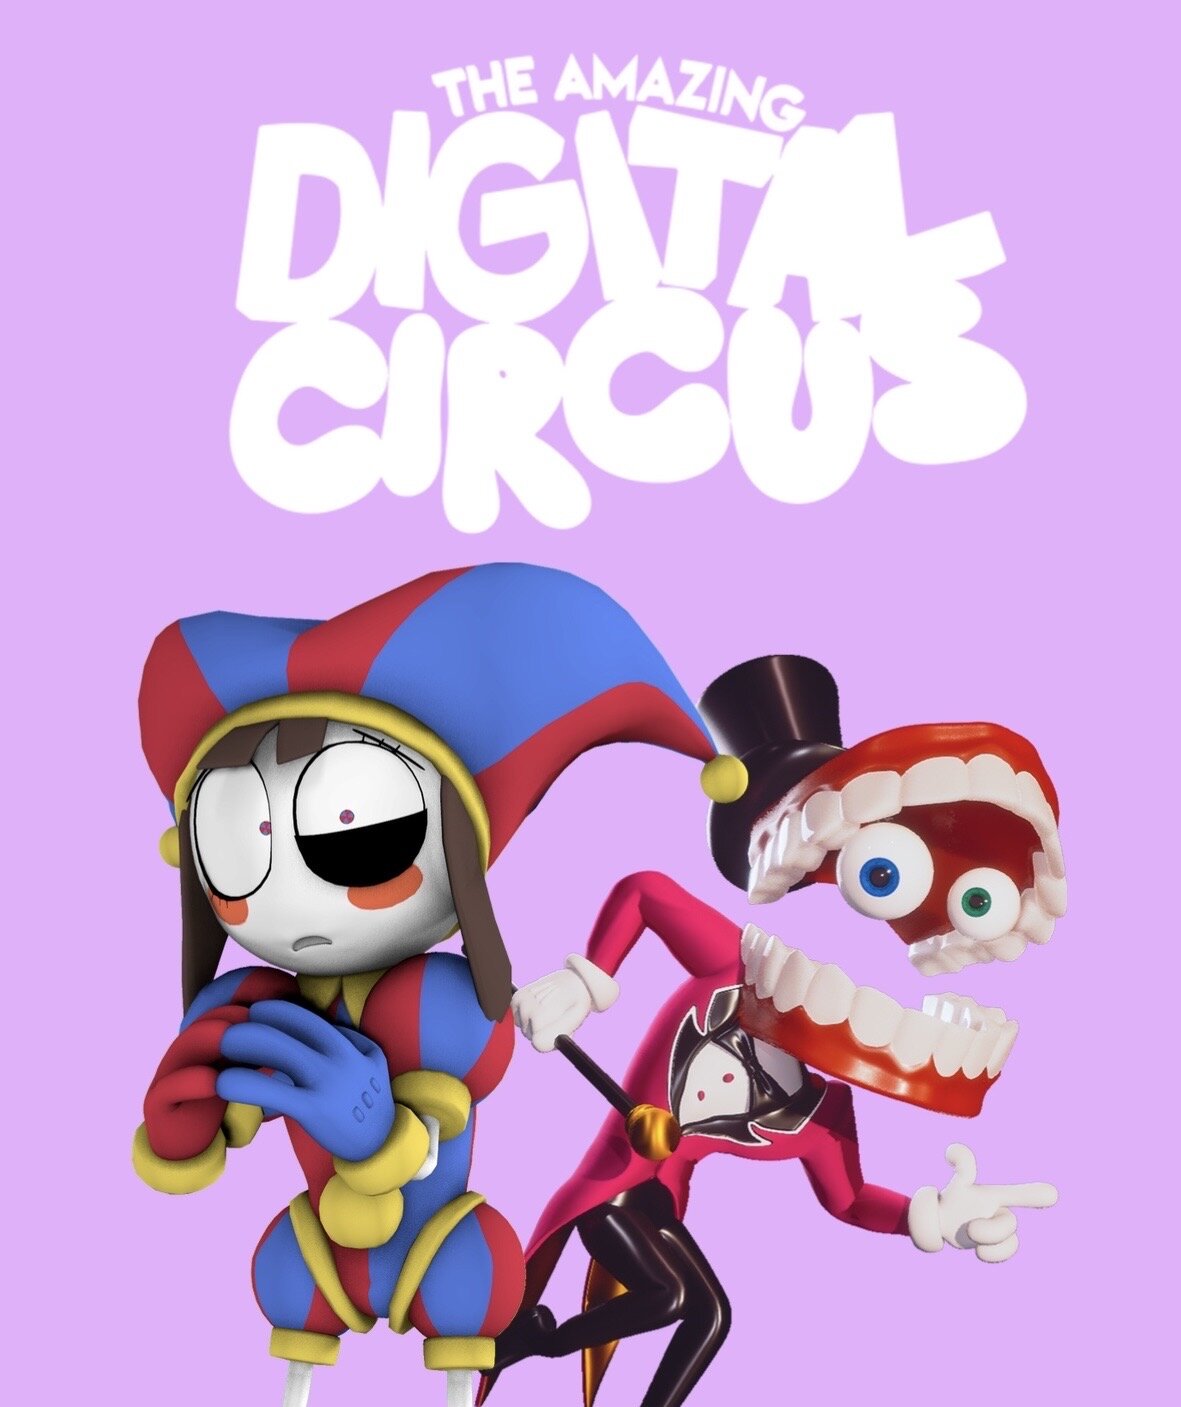 The Amazing Digital Circus ne zaman